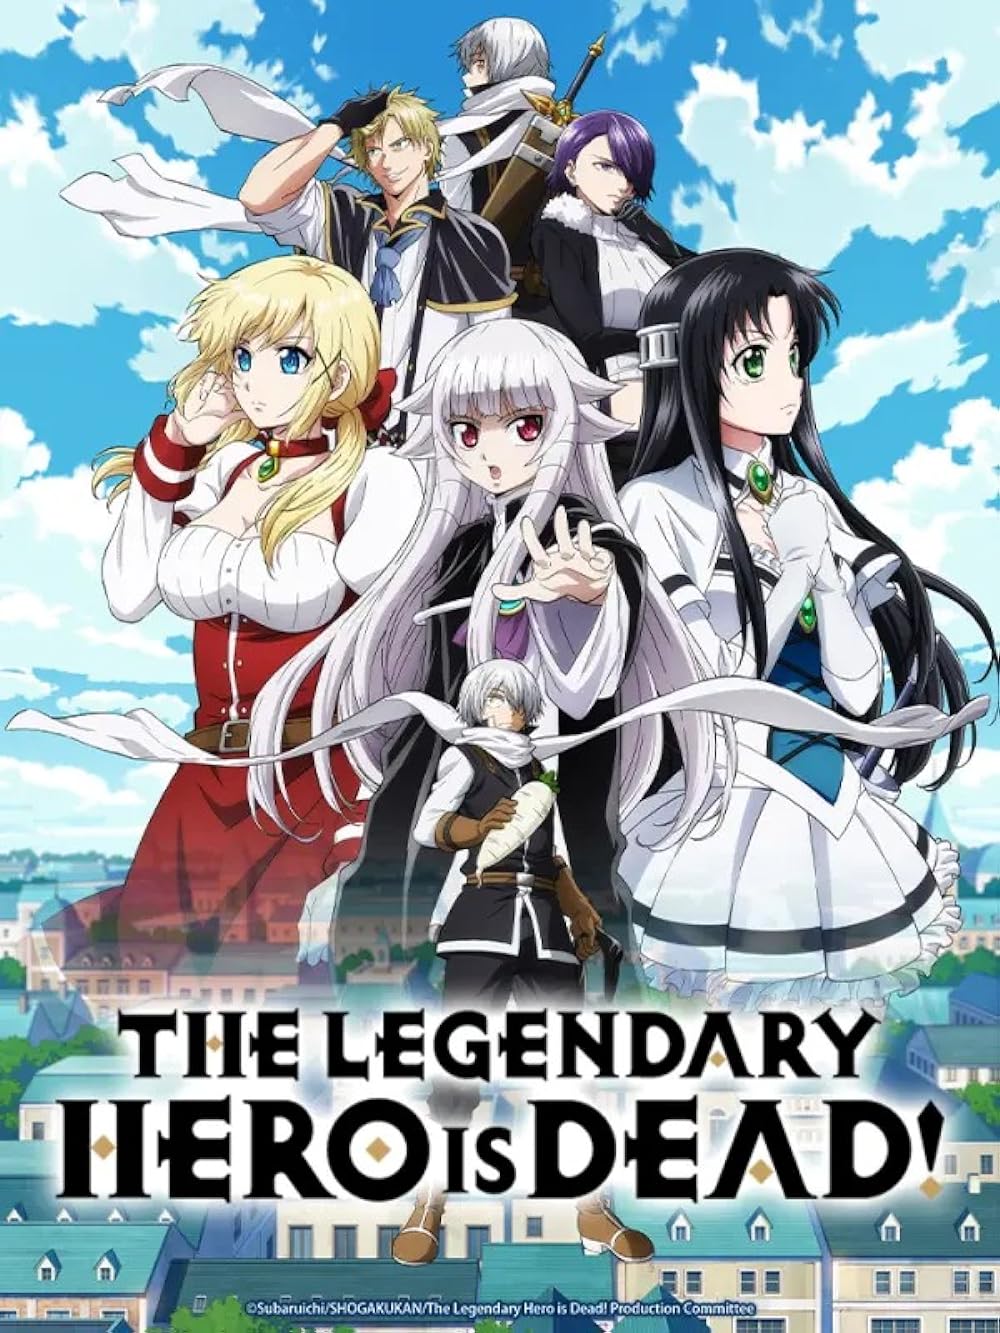 The Legendary Hero Is Dead!